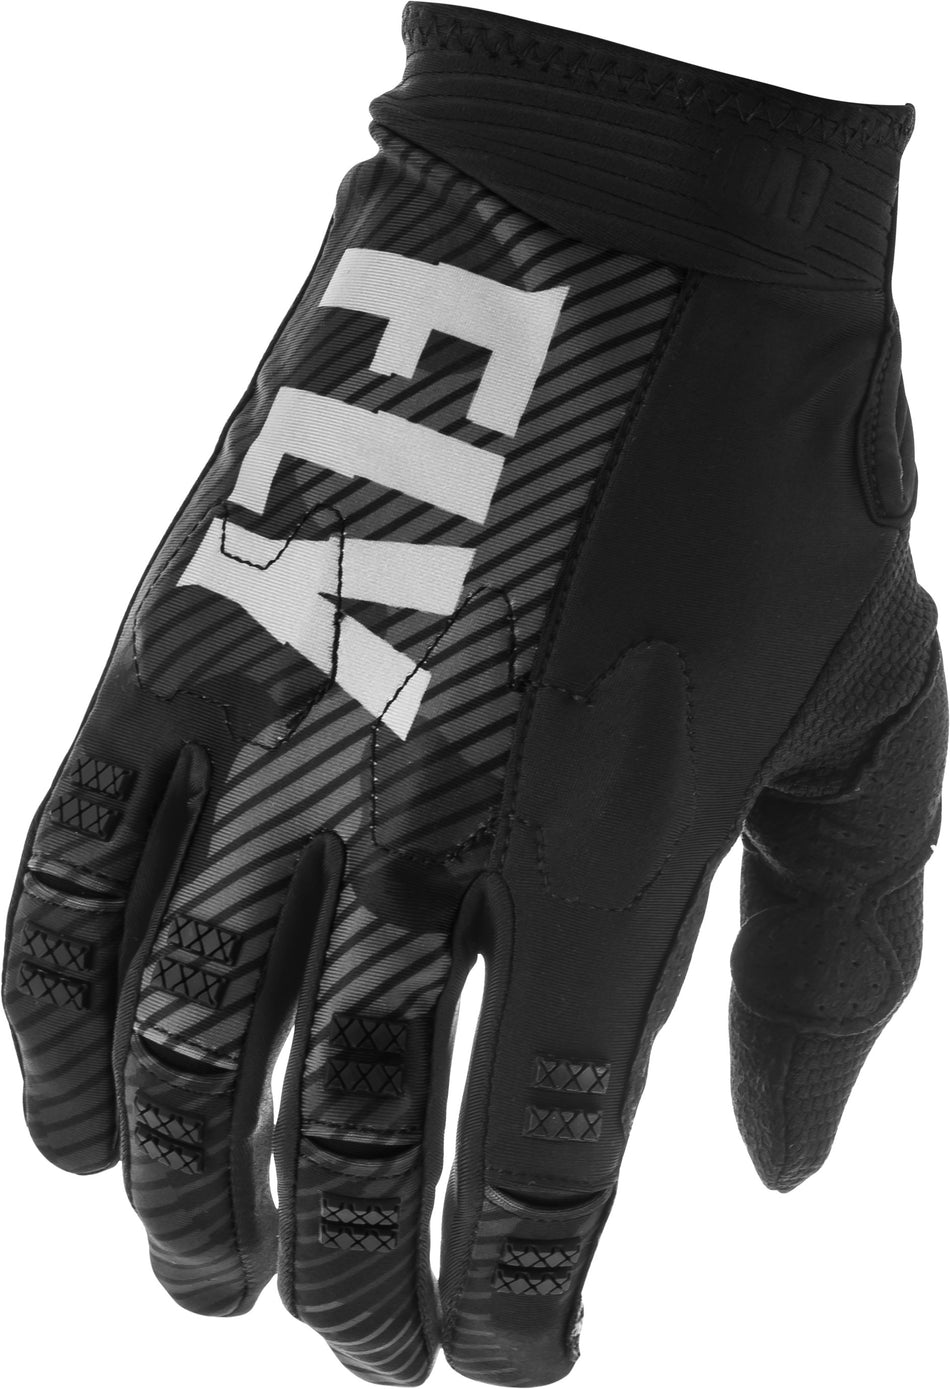 FLY RACING Evolution Gloves Black/Grey Sz 12 373-11012